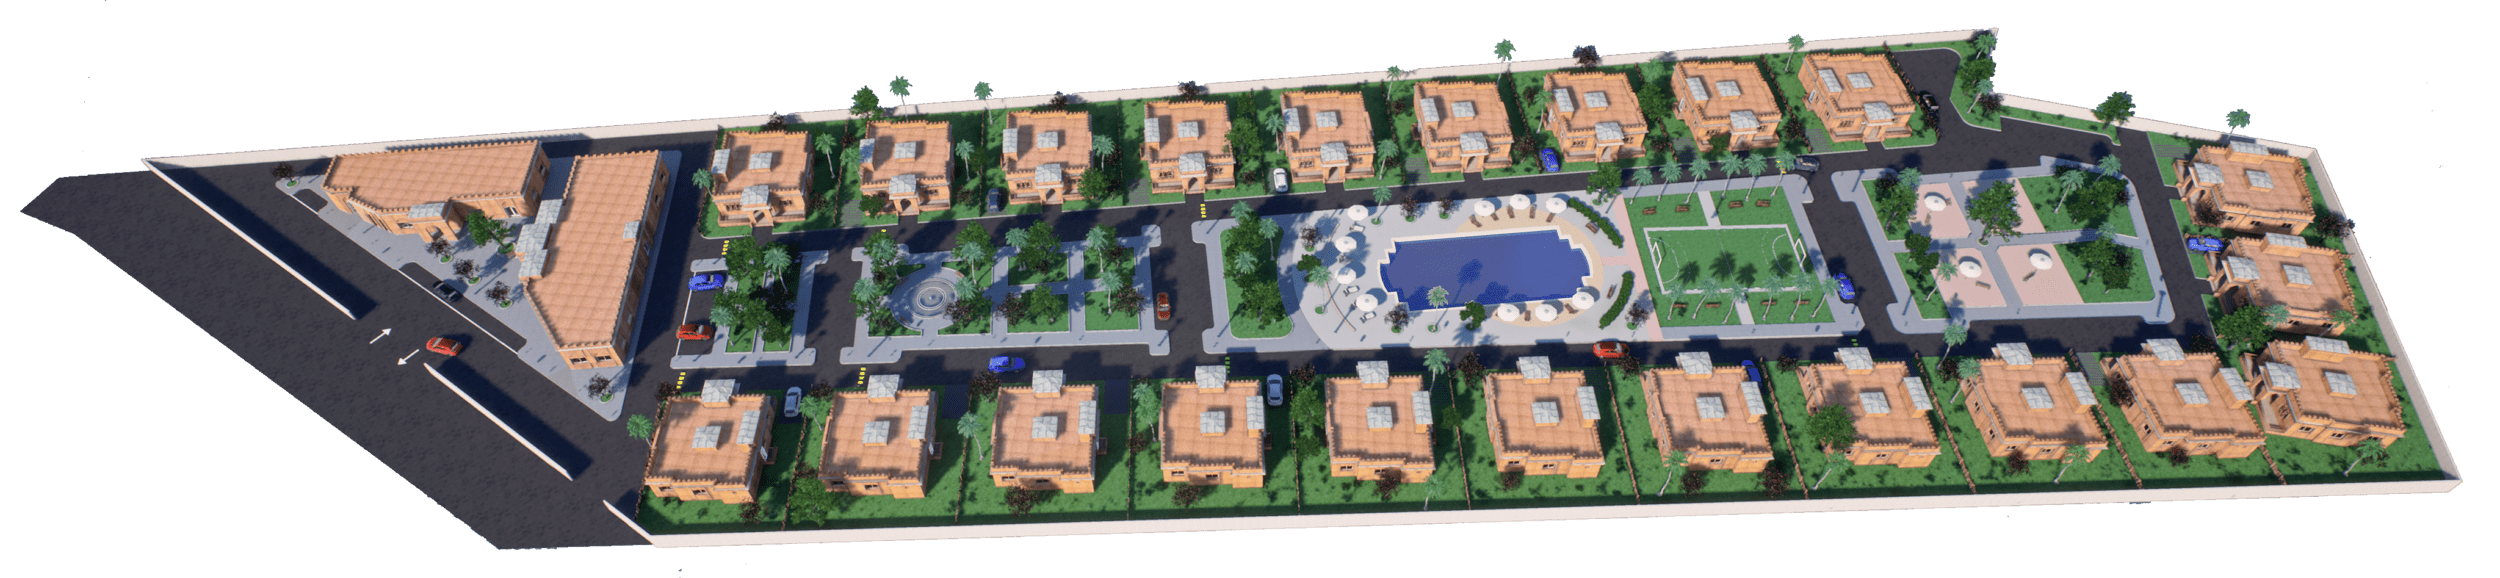 3D modeling - 3D rendering - Real estate promotion - Les Bougainvilliers